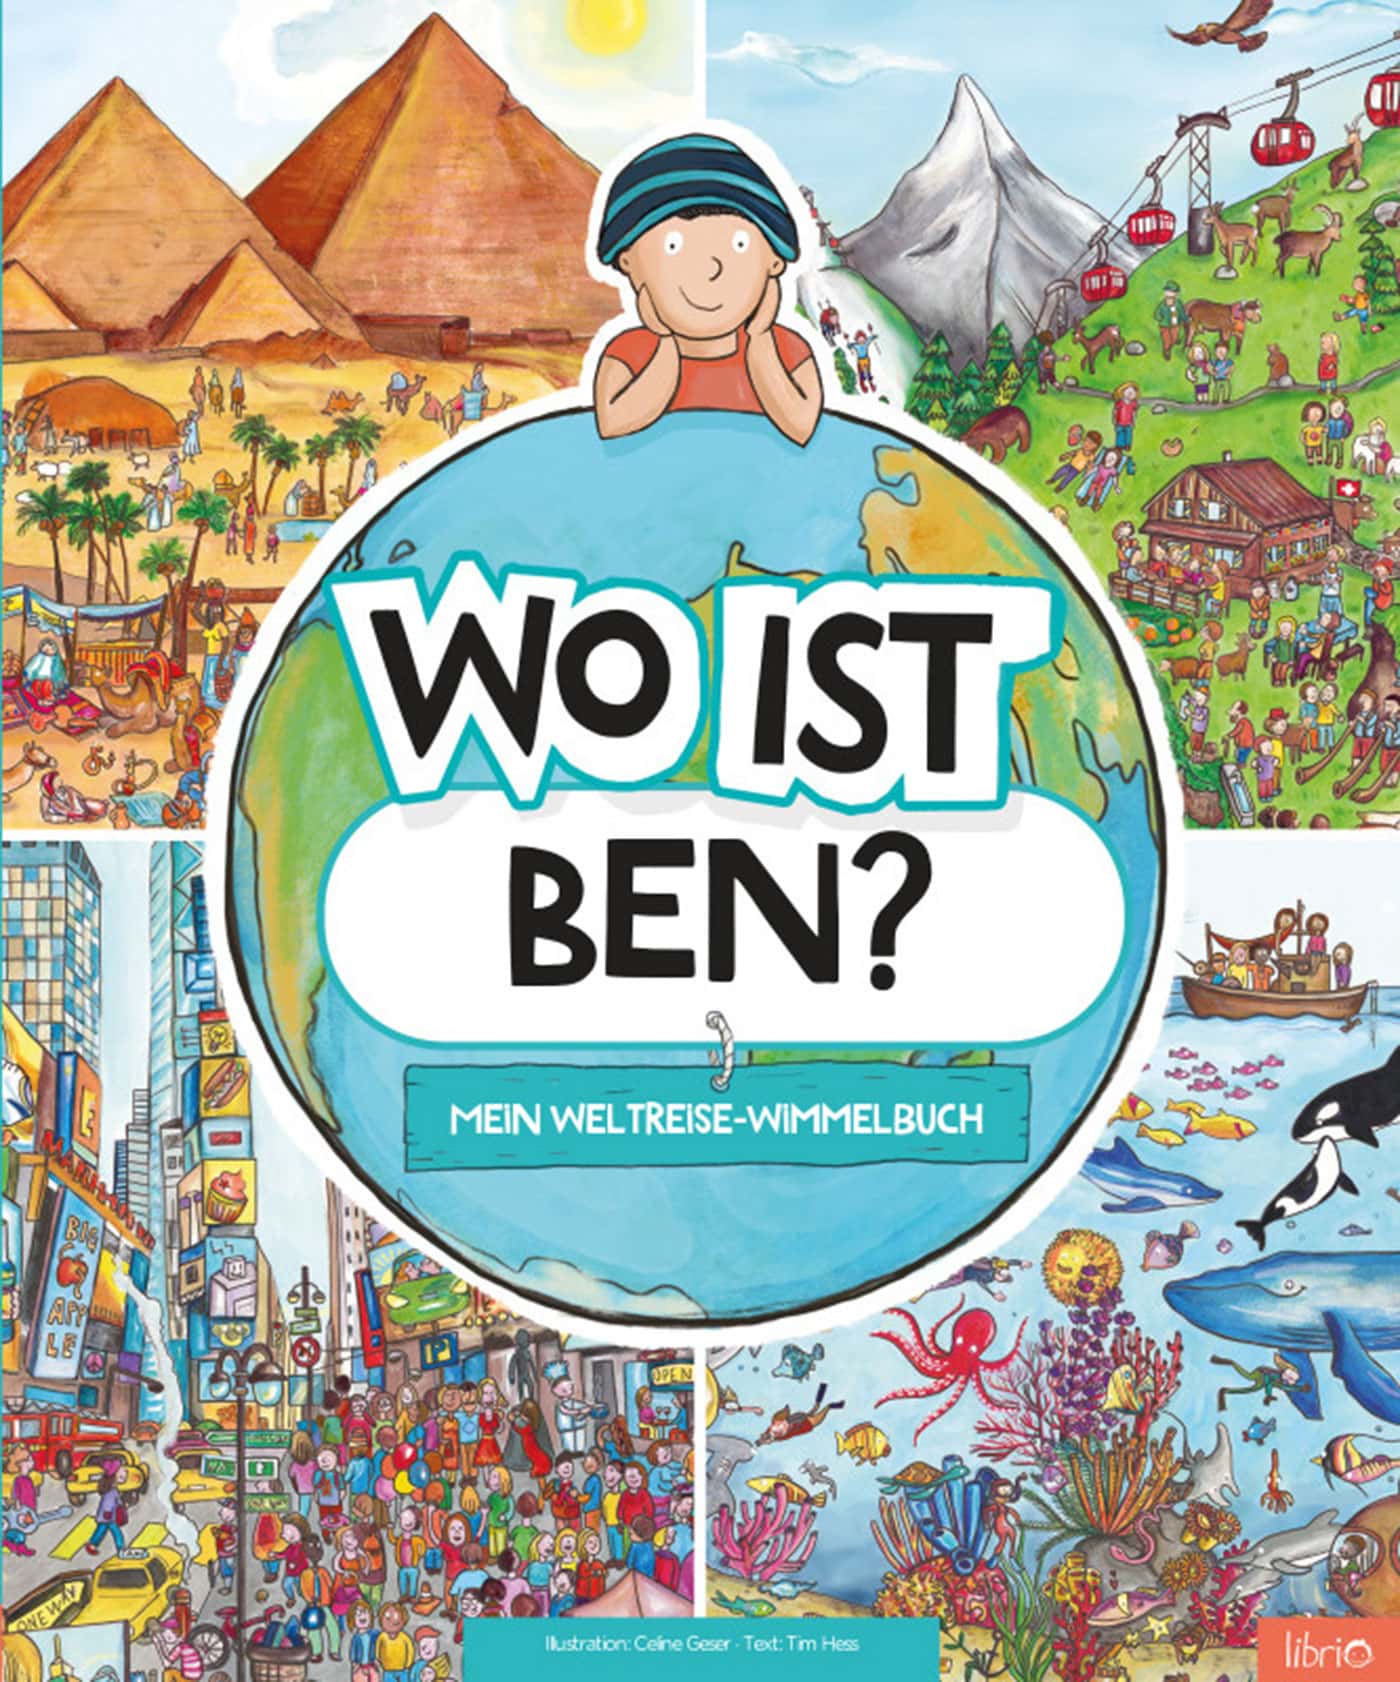 Kinderbuch individualisieren: Wimmelbuch „Wo ist ...?“ // HIMBEER